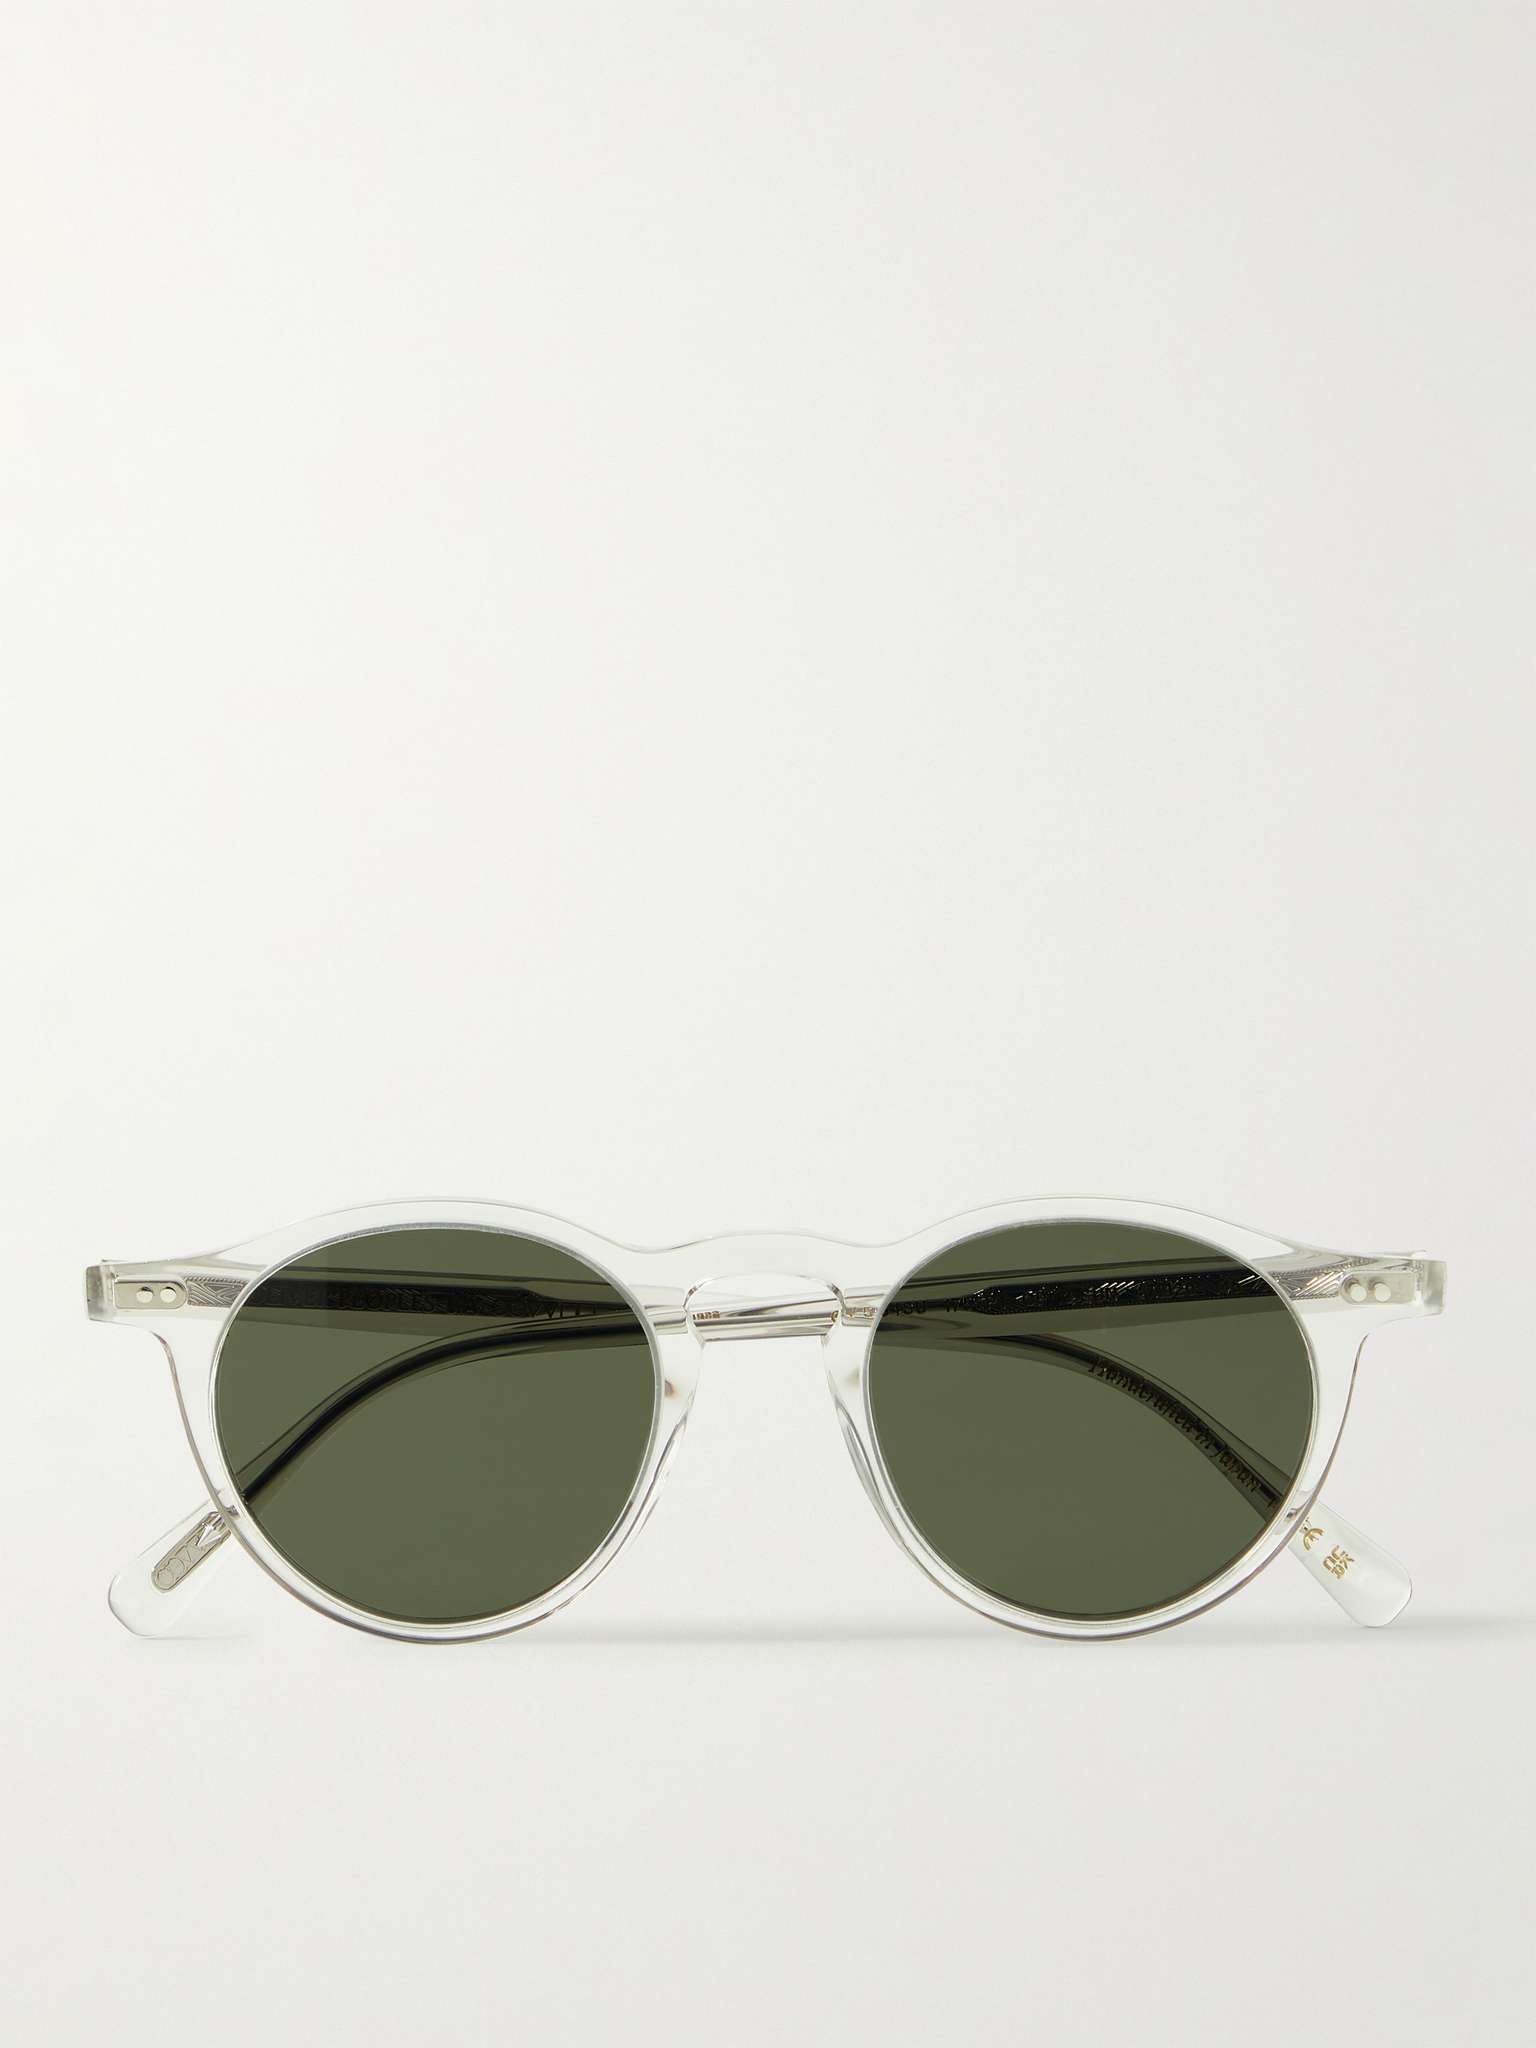 OP-13 Round-Frame Tortoiseshell Acetate Sunglasses - 1